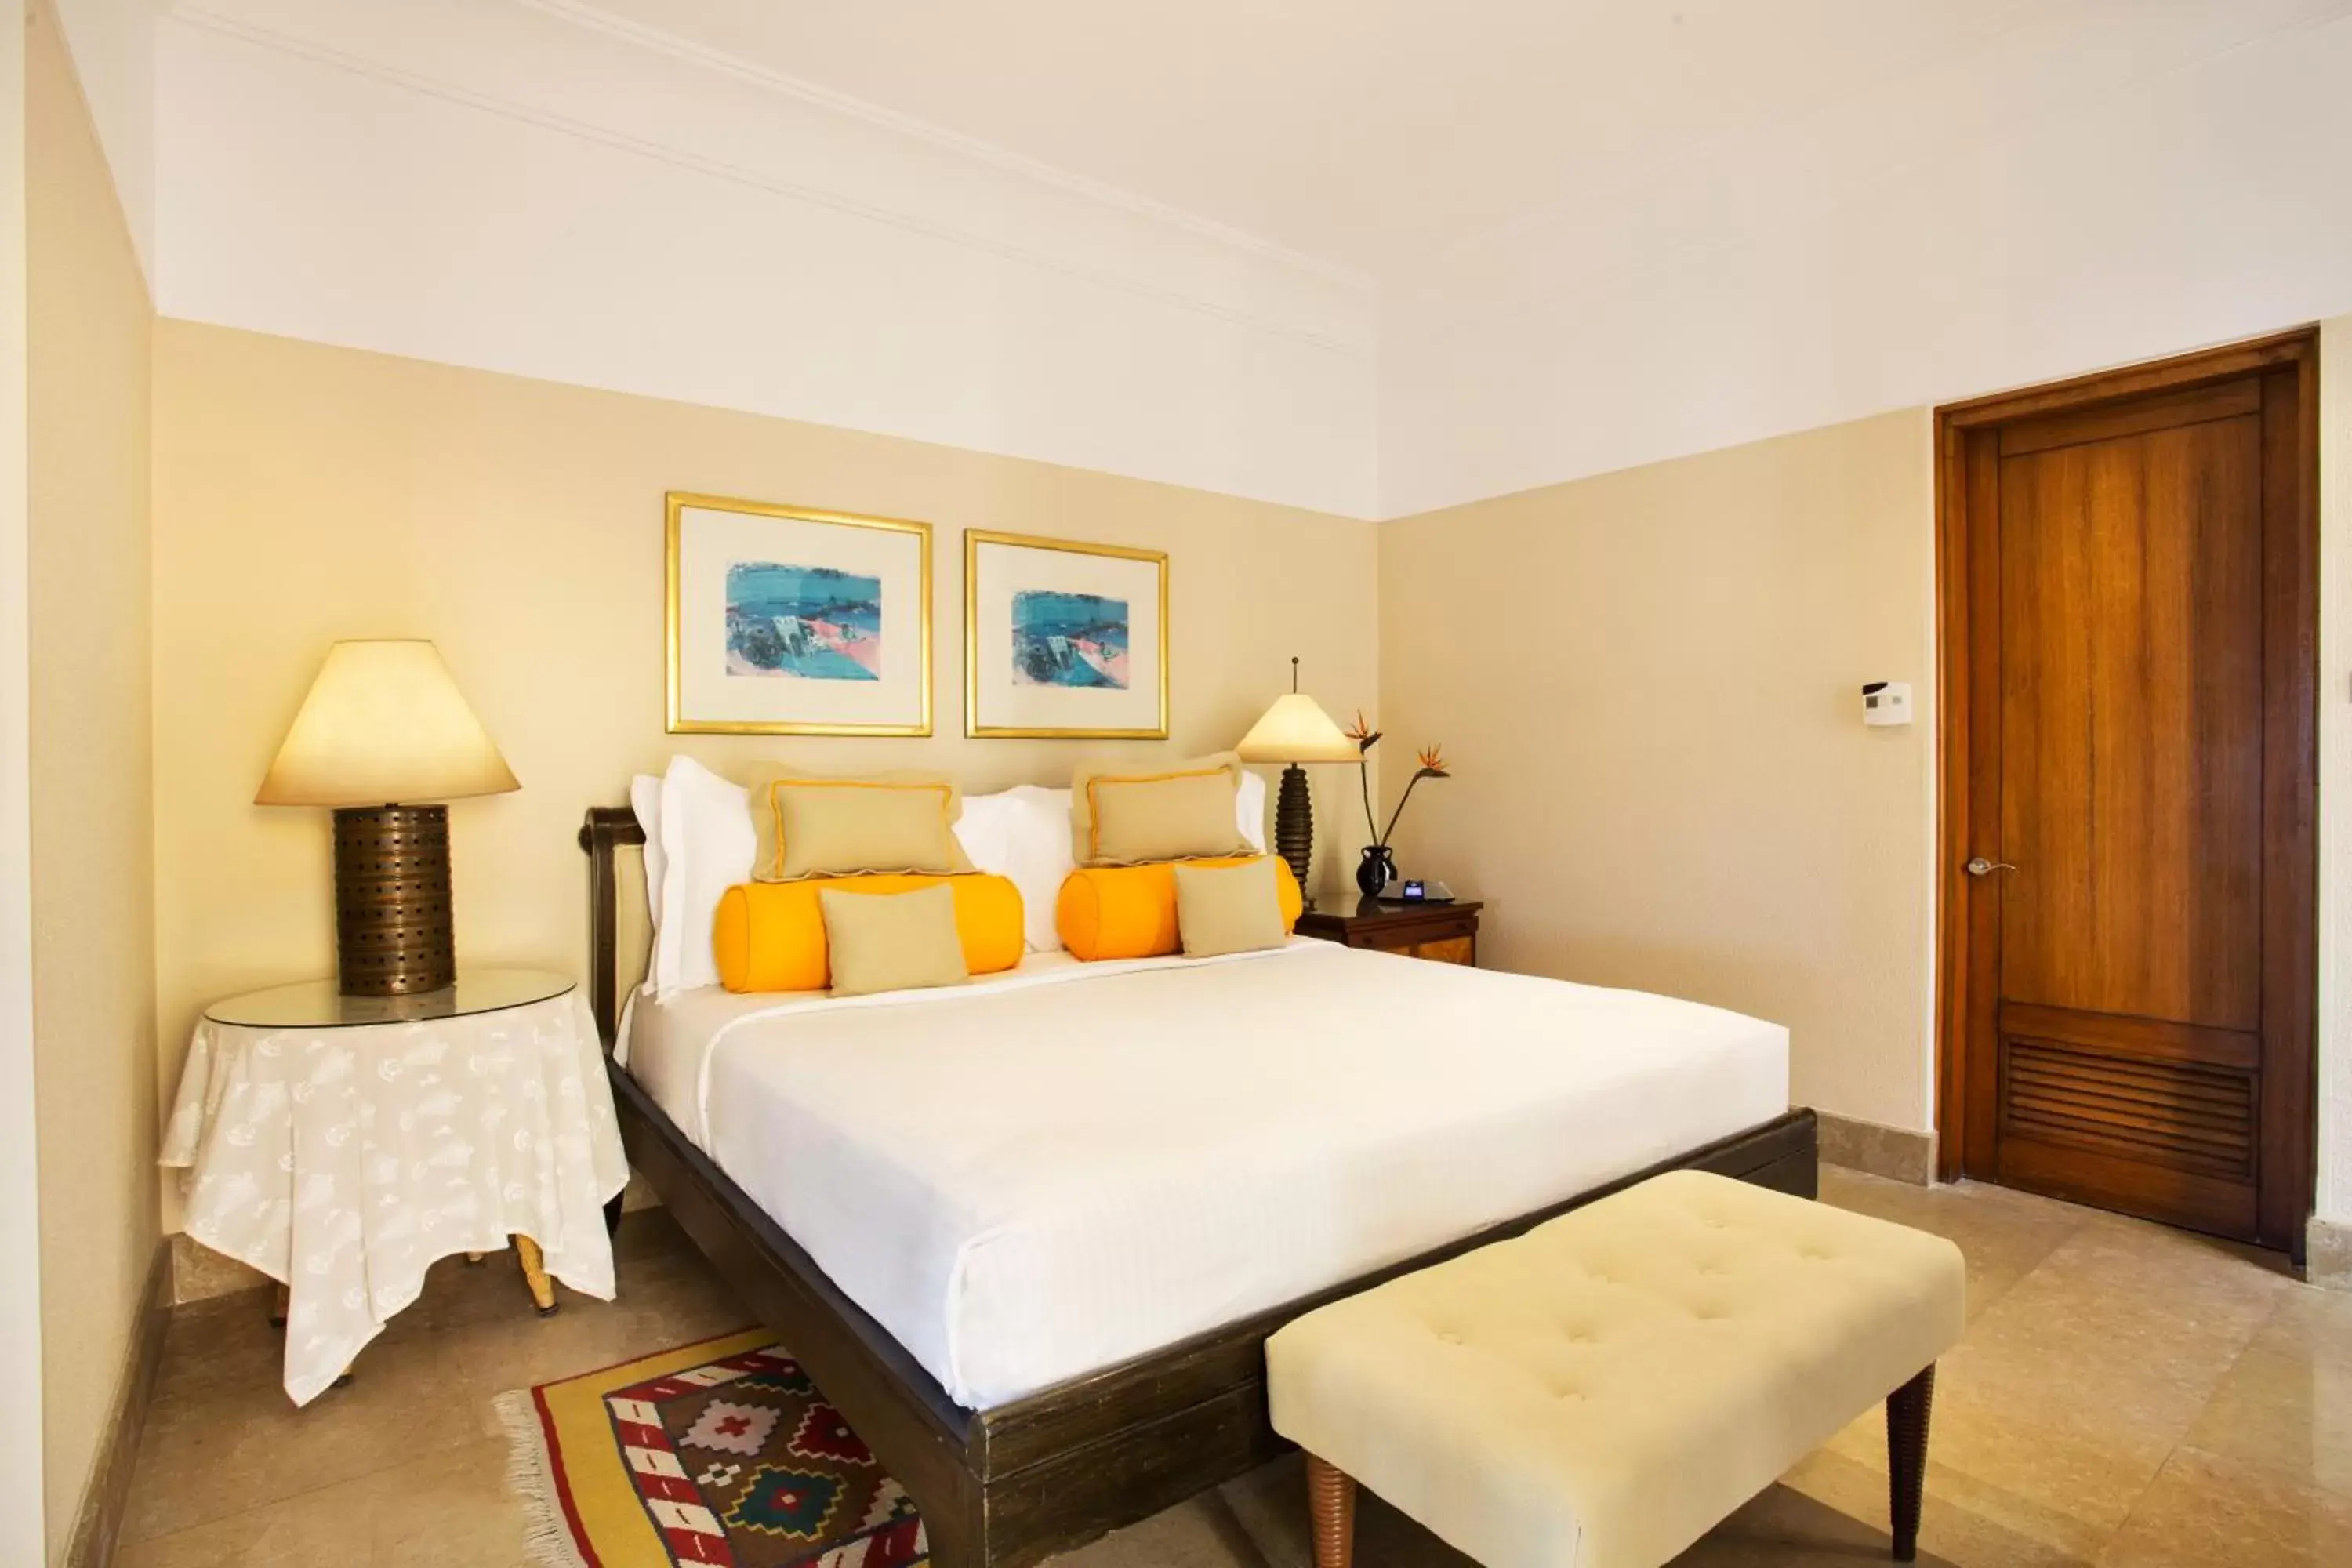 Bedroom, Room Photo in The Oberoi Beach Resort, Sahl Hasheesh